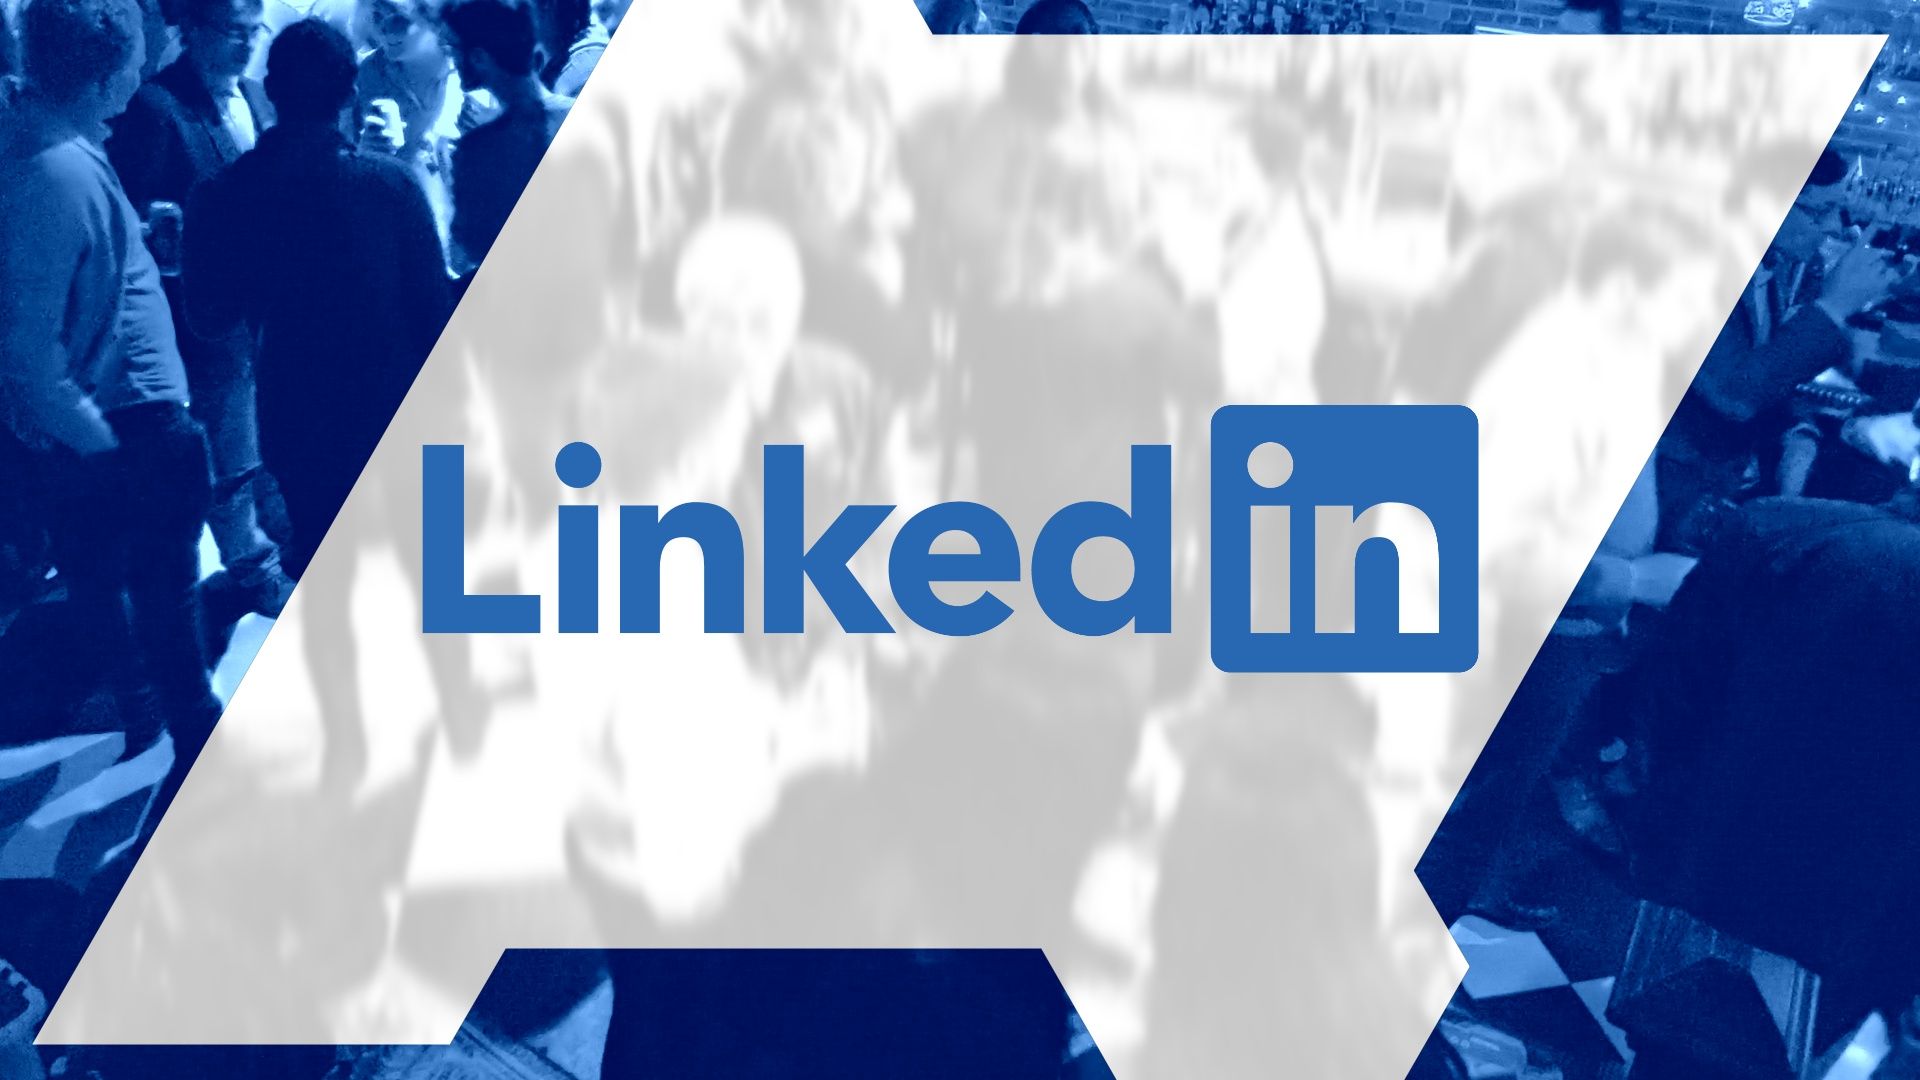 LinkedIn logo with text